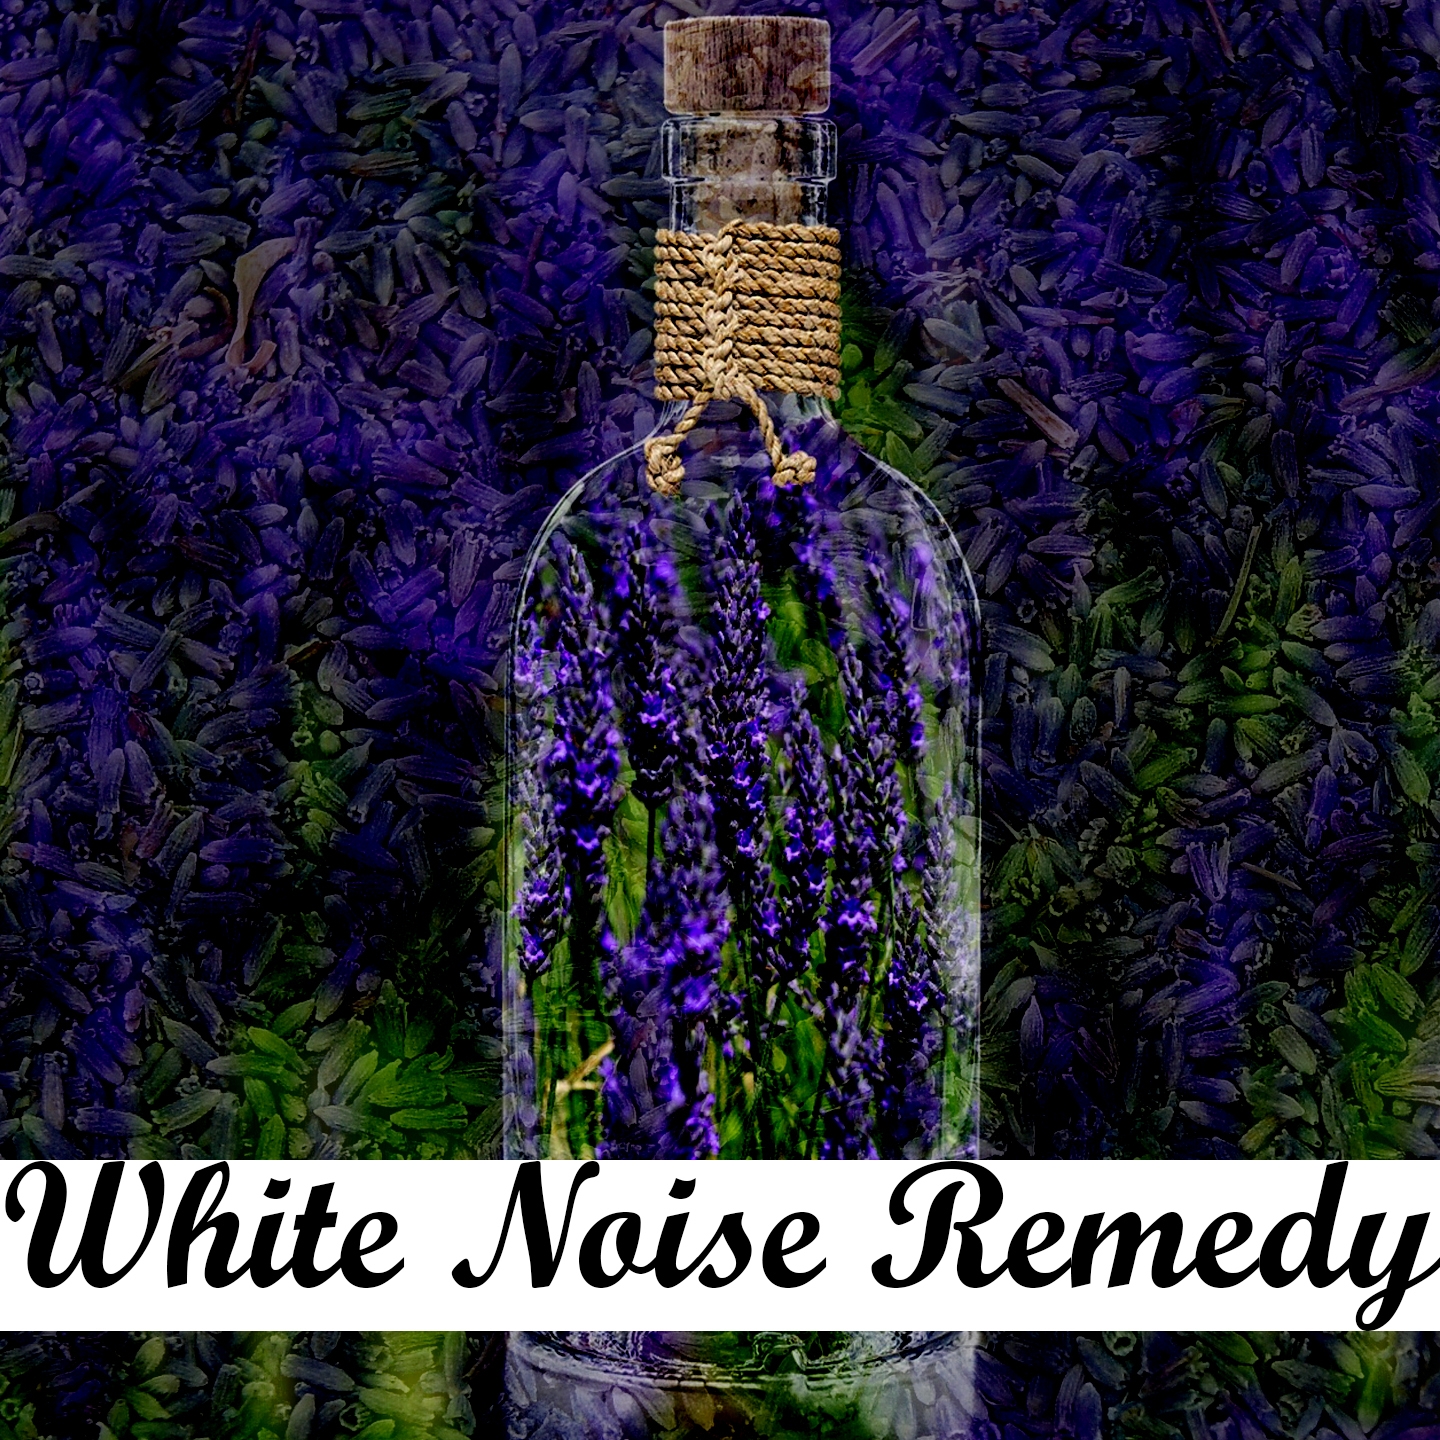 White Noise Remedy